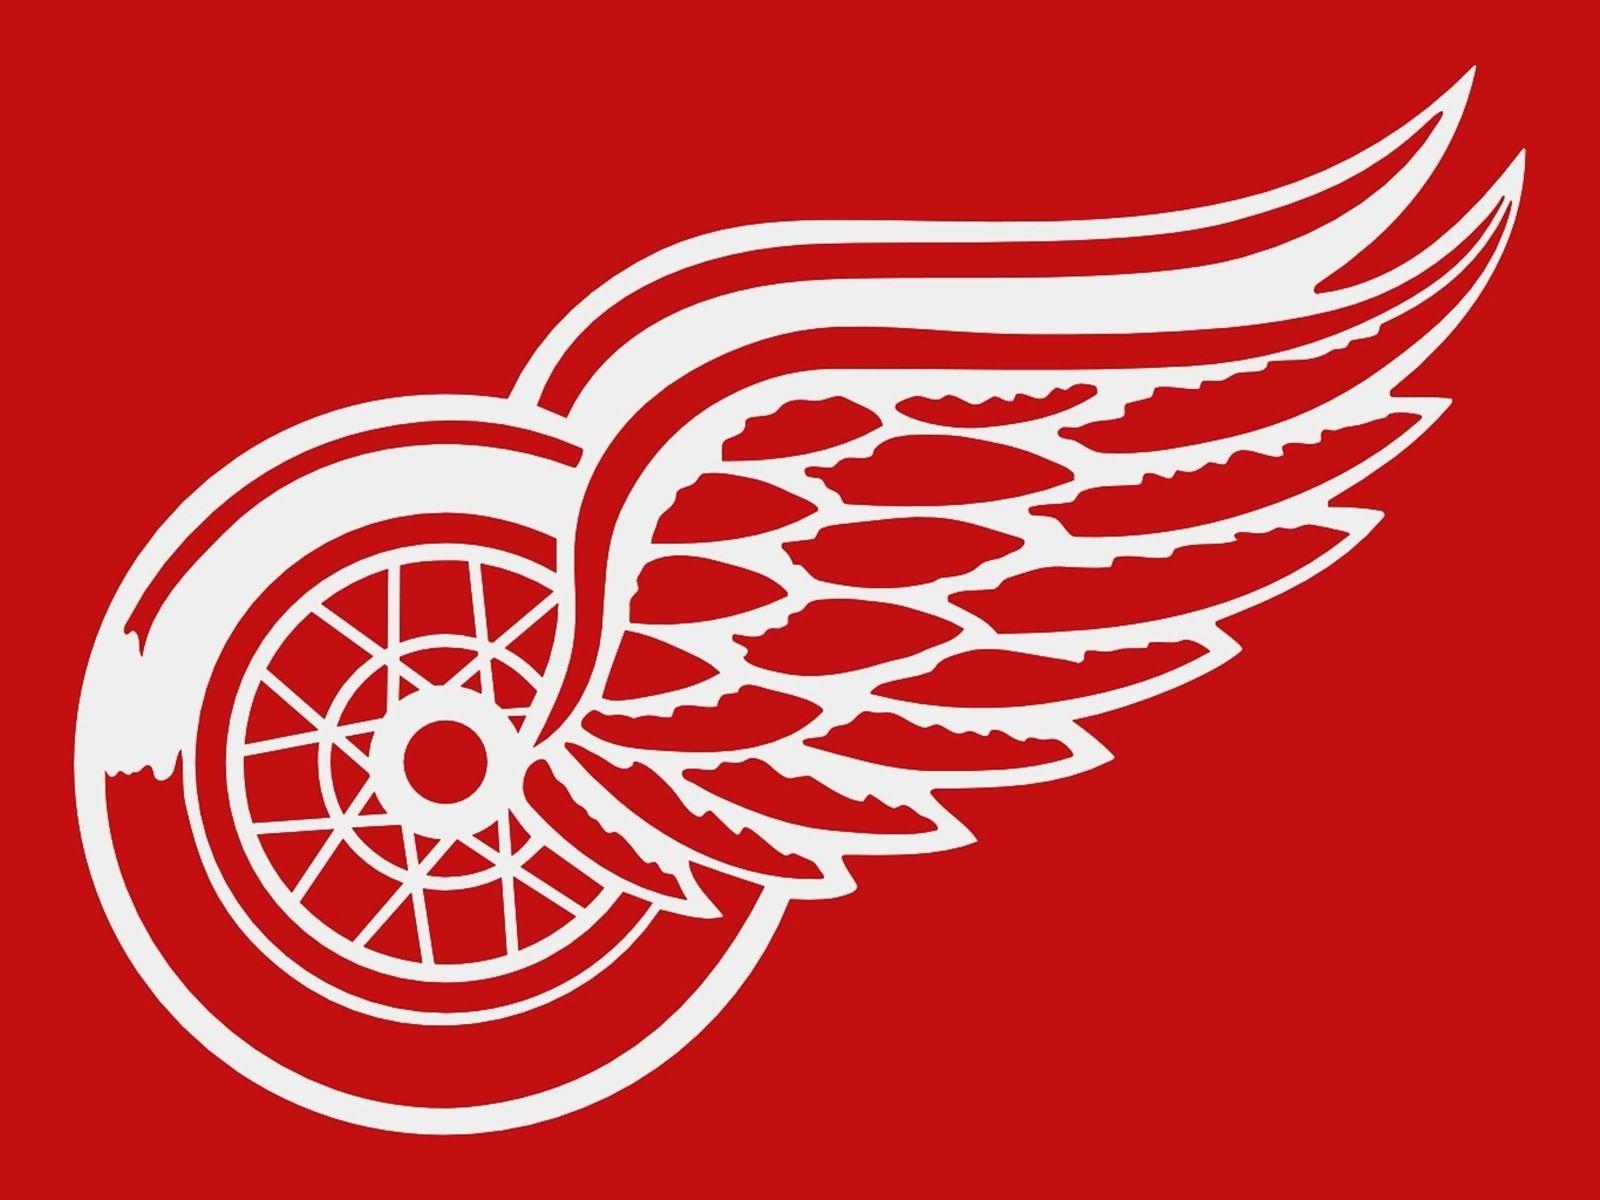 Wallpaper.wiki Detroit Red Wings Image PIC WPD003489